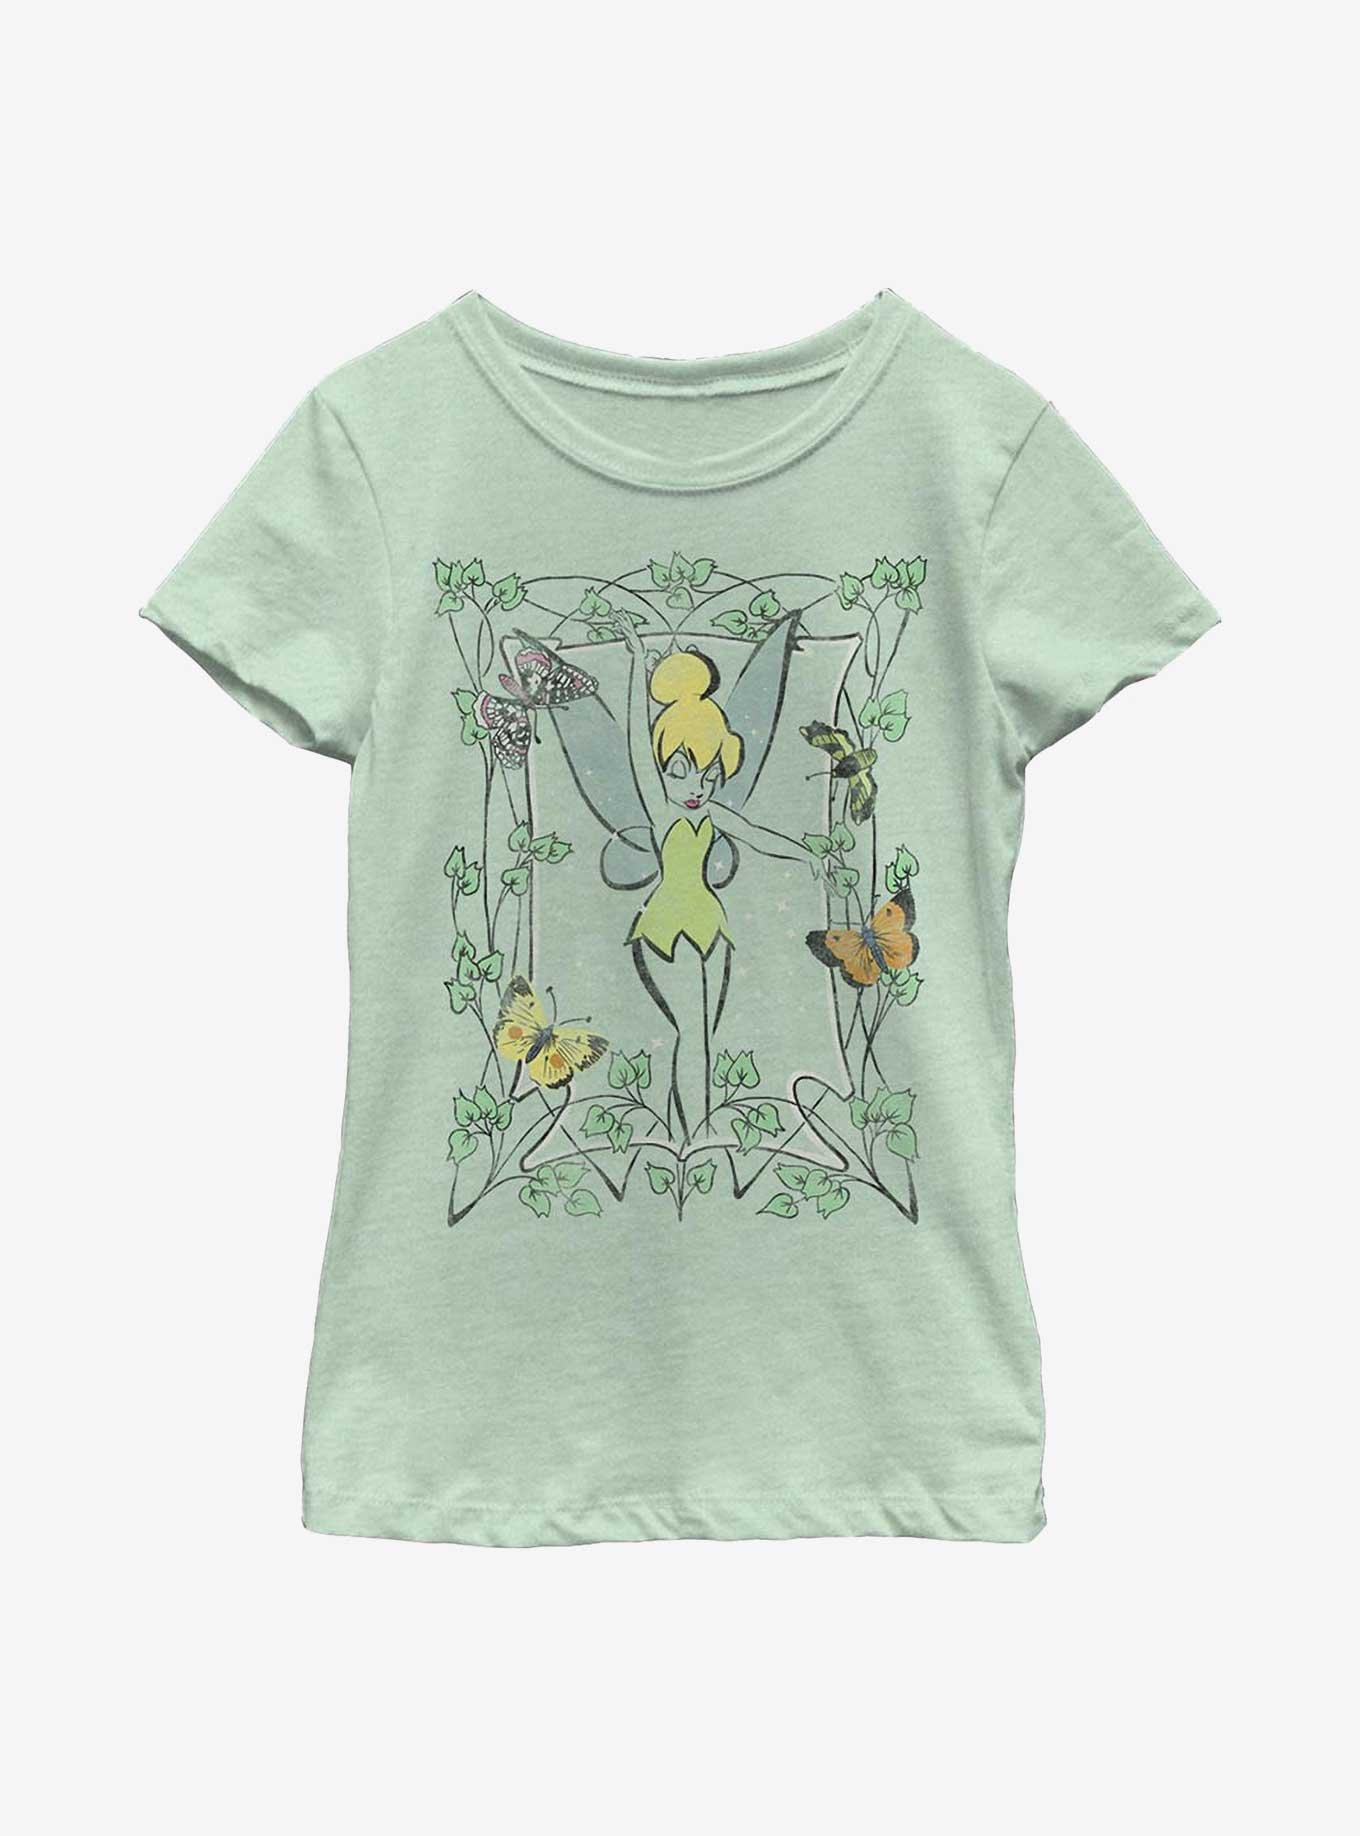 Disney Peter Pan Tinker Bell Youth Girls T-Shirt, , hi-res